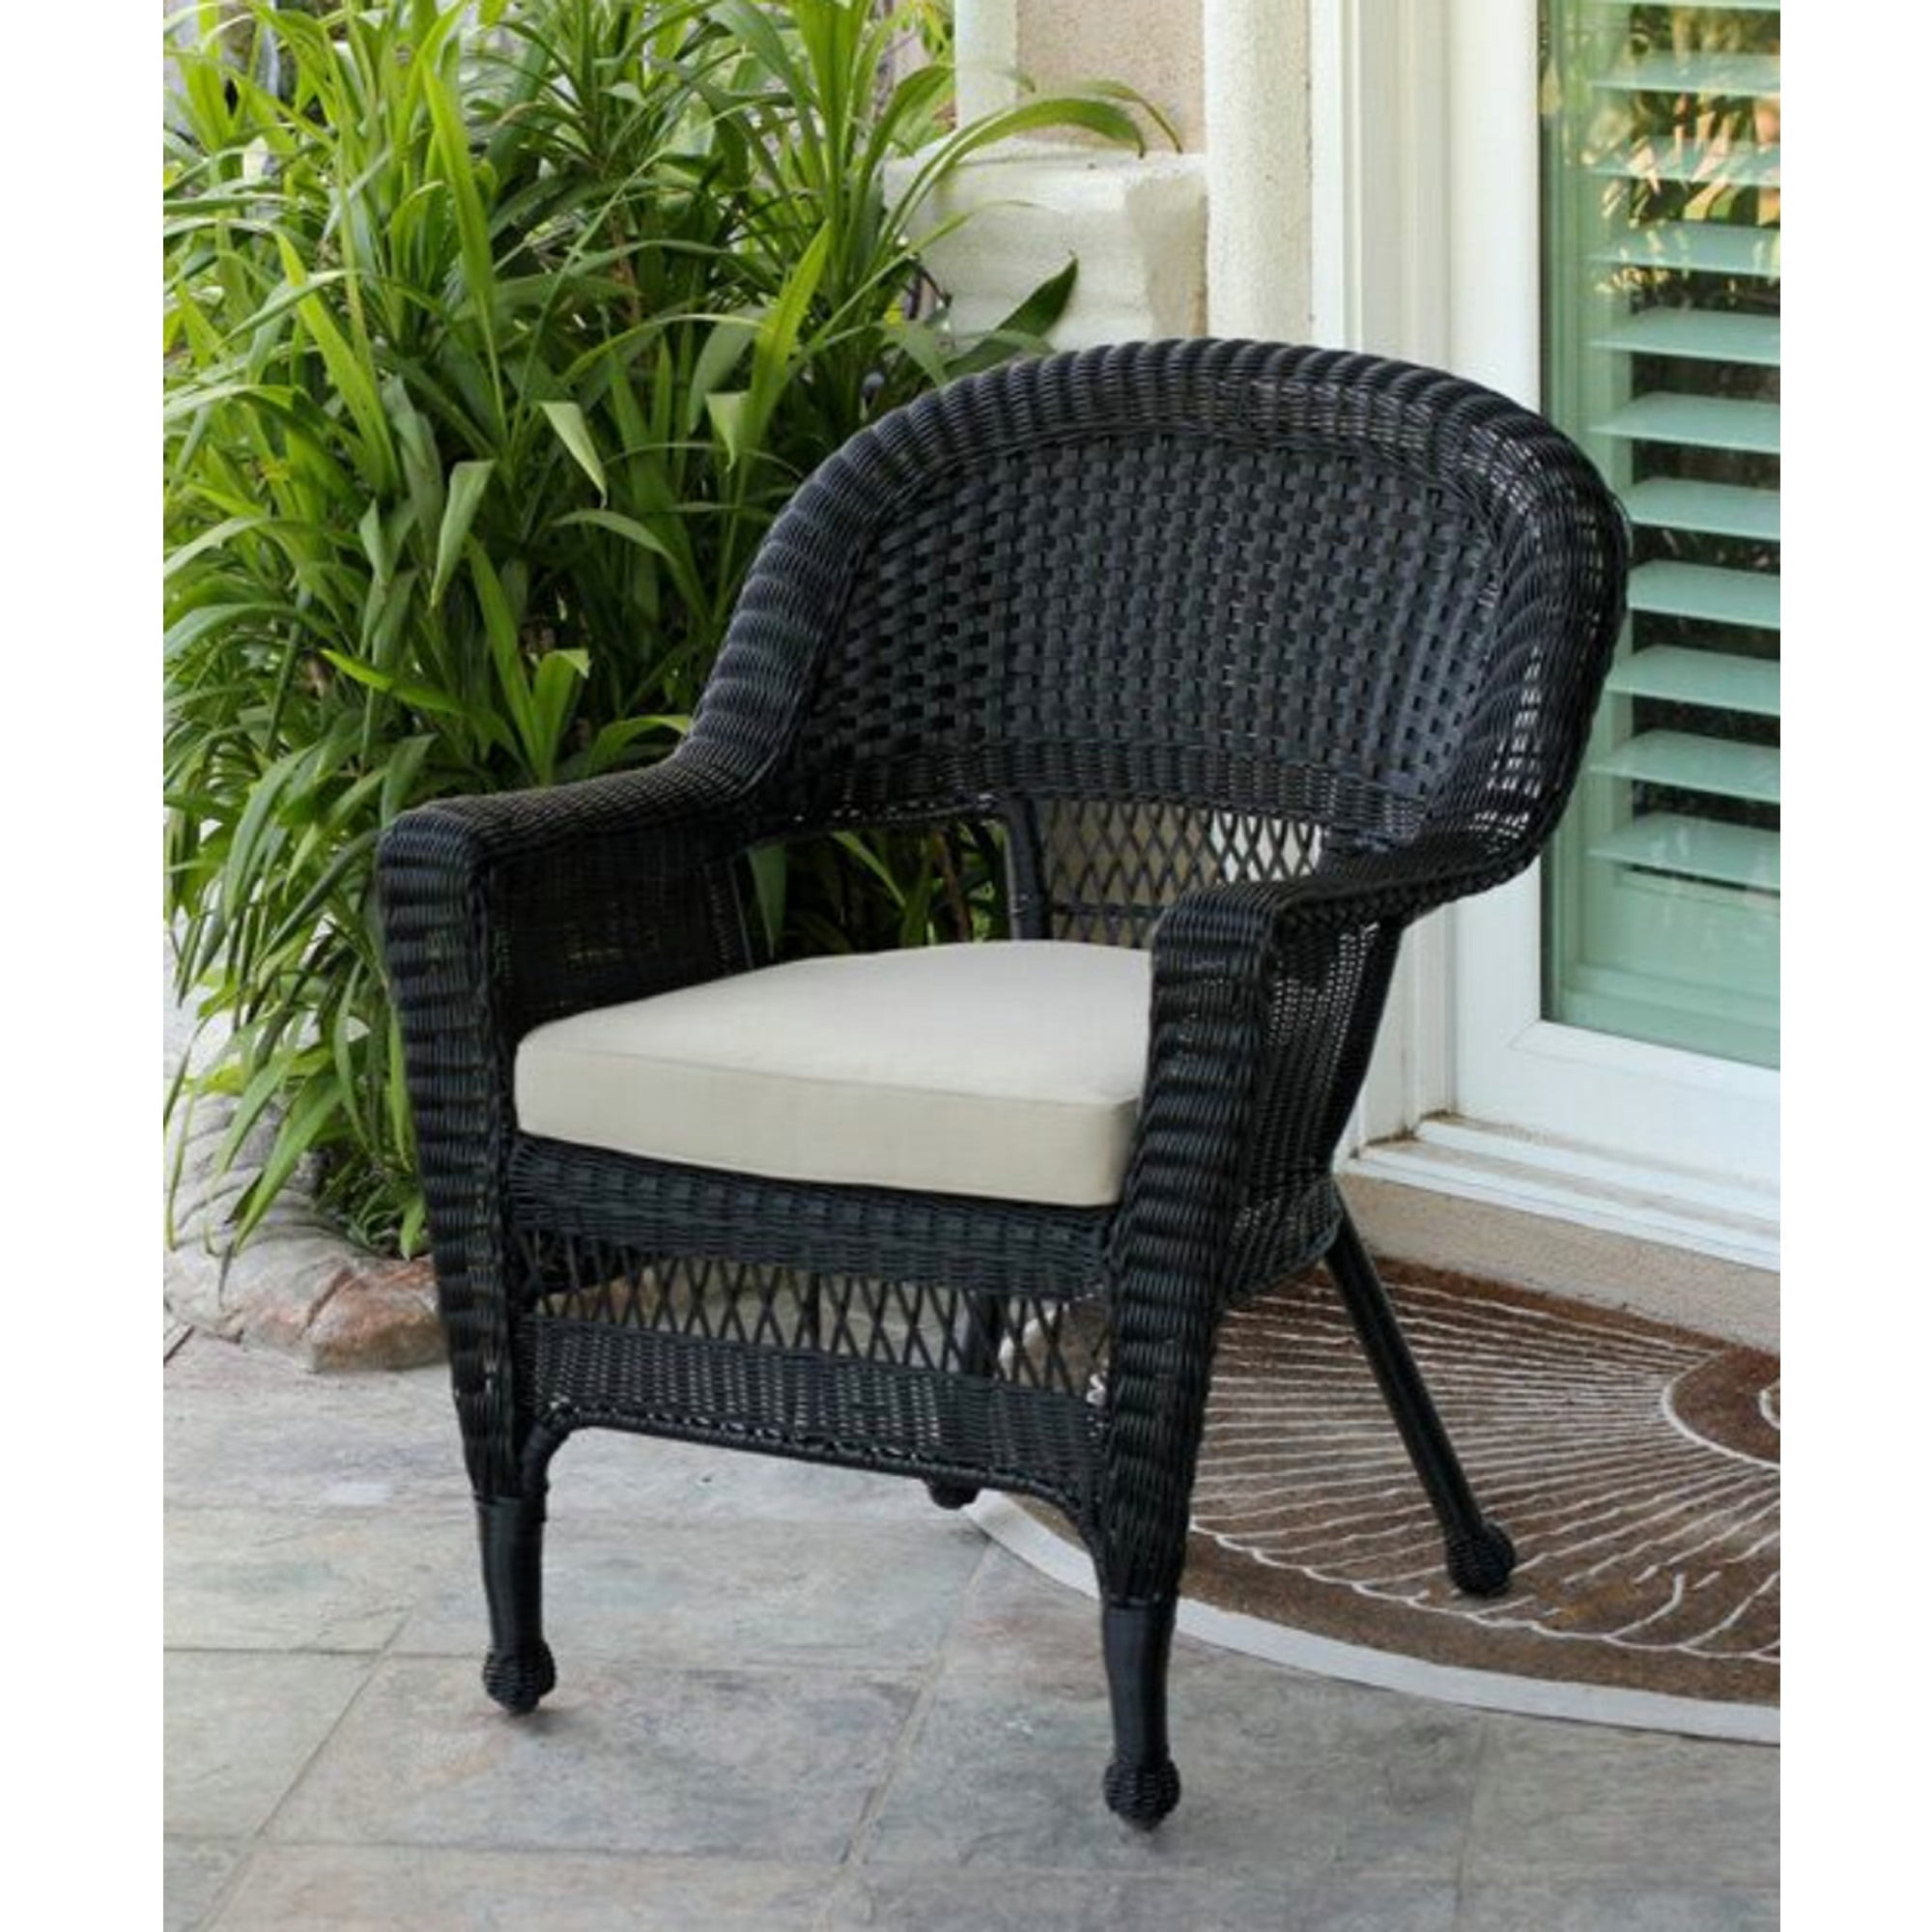 36" Black Resin Wicker Outdoor Patio Garden Chair with Tan